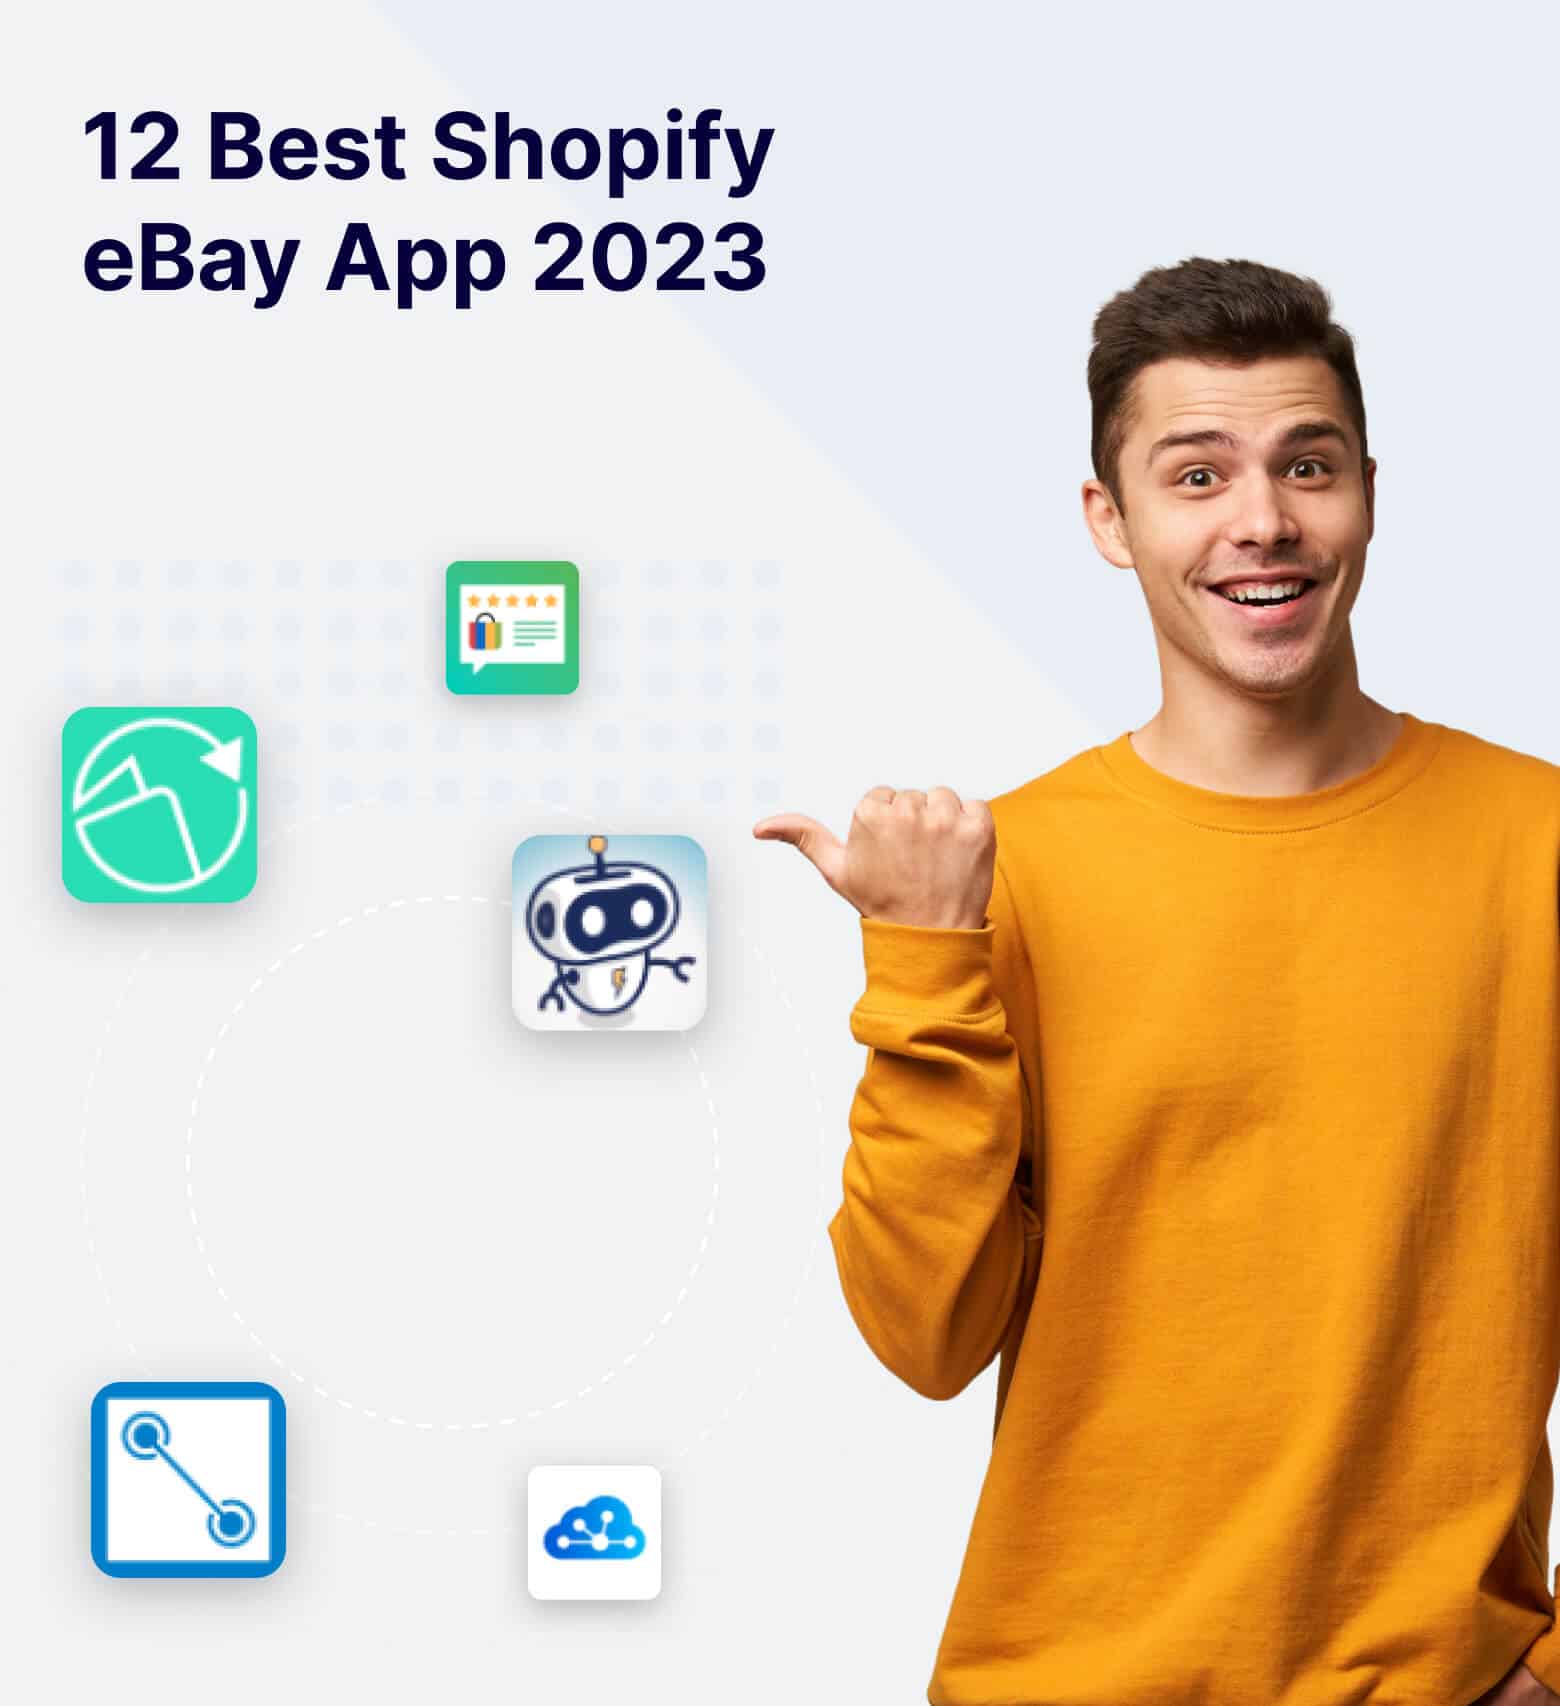 Best Shopify eBay App